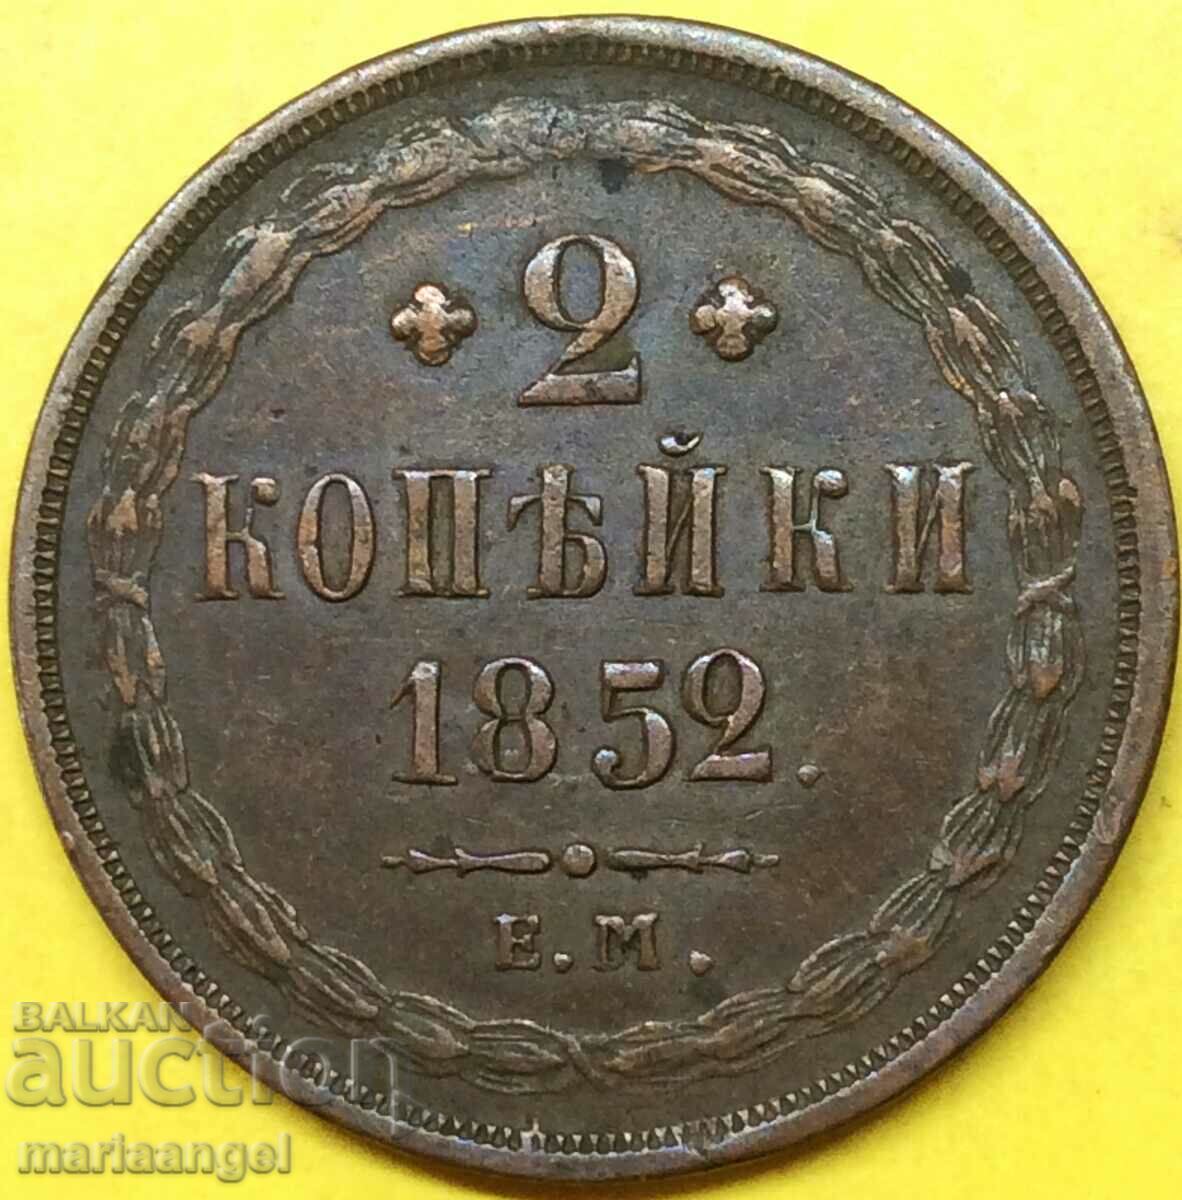 Tsarist Russia 2 kopecks 1852 EM - rare